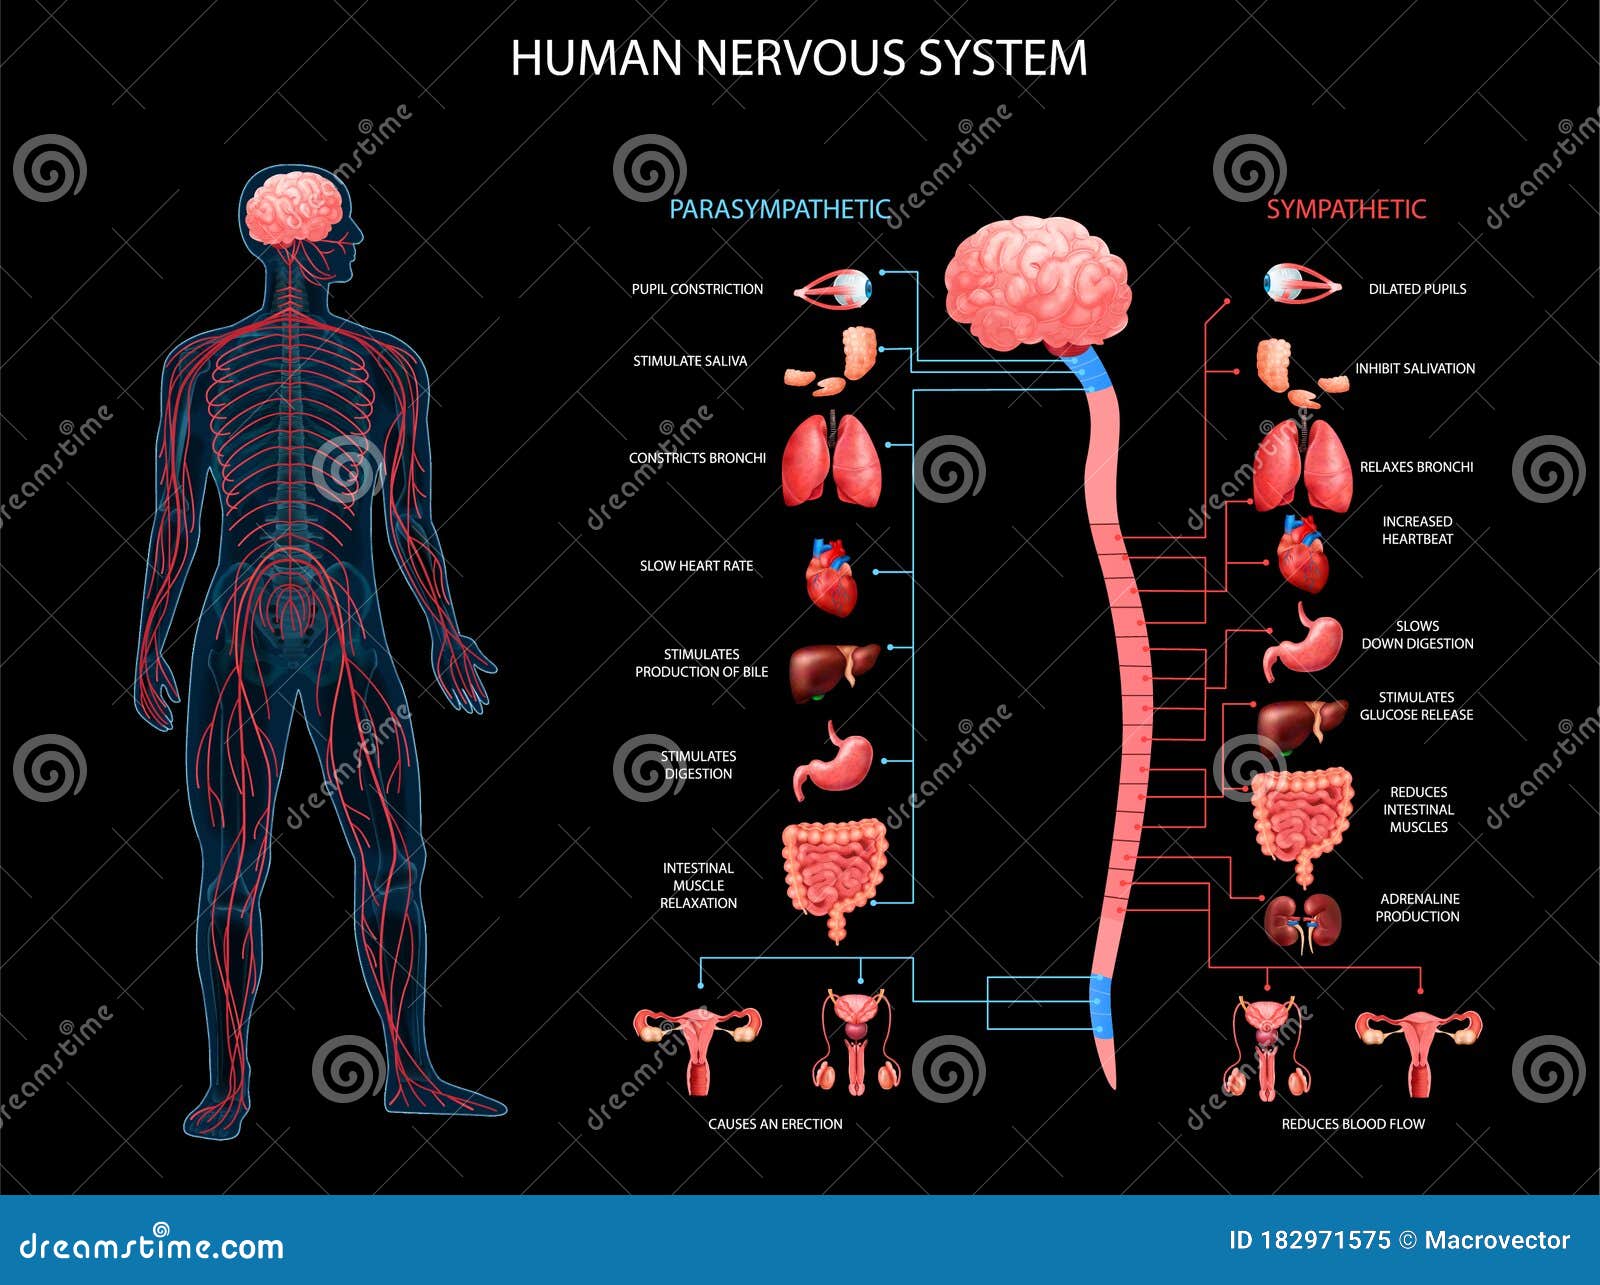 human nervous system background